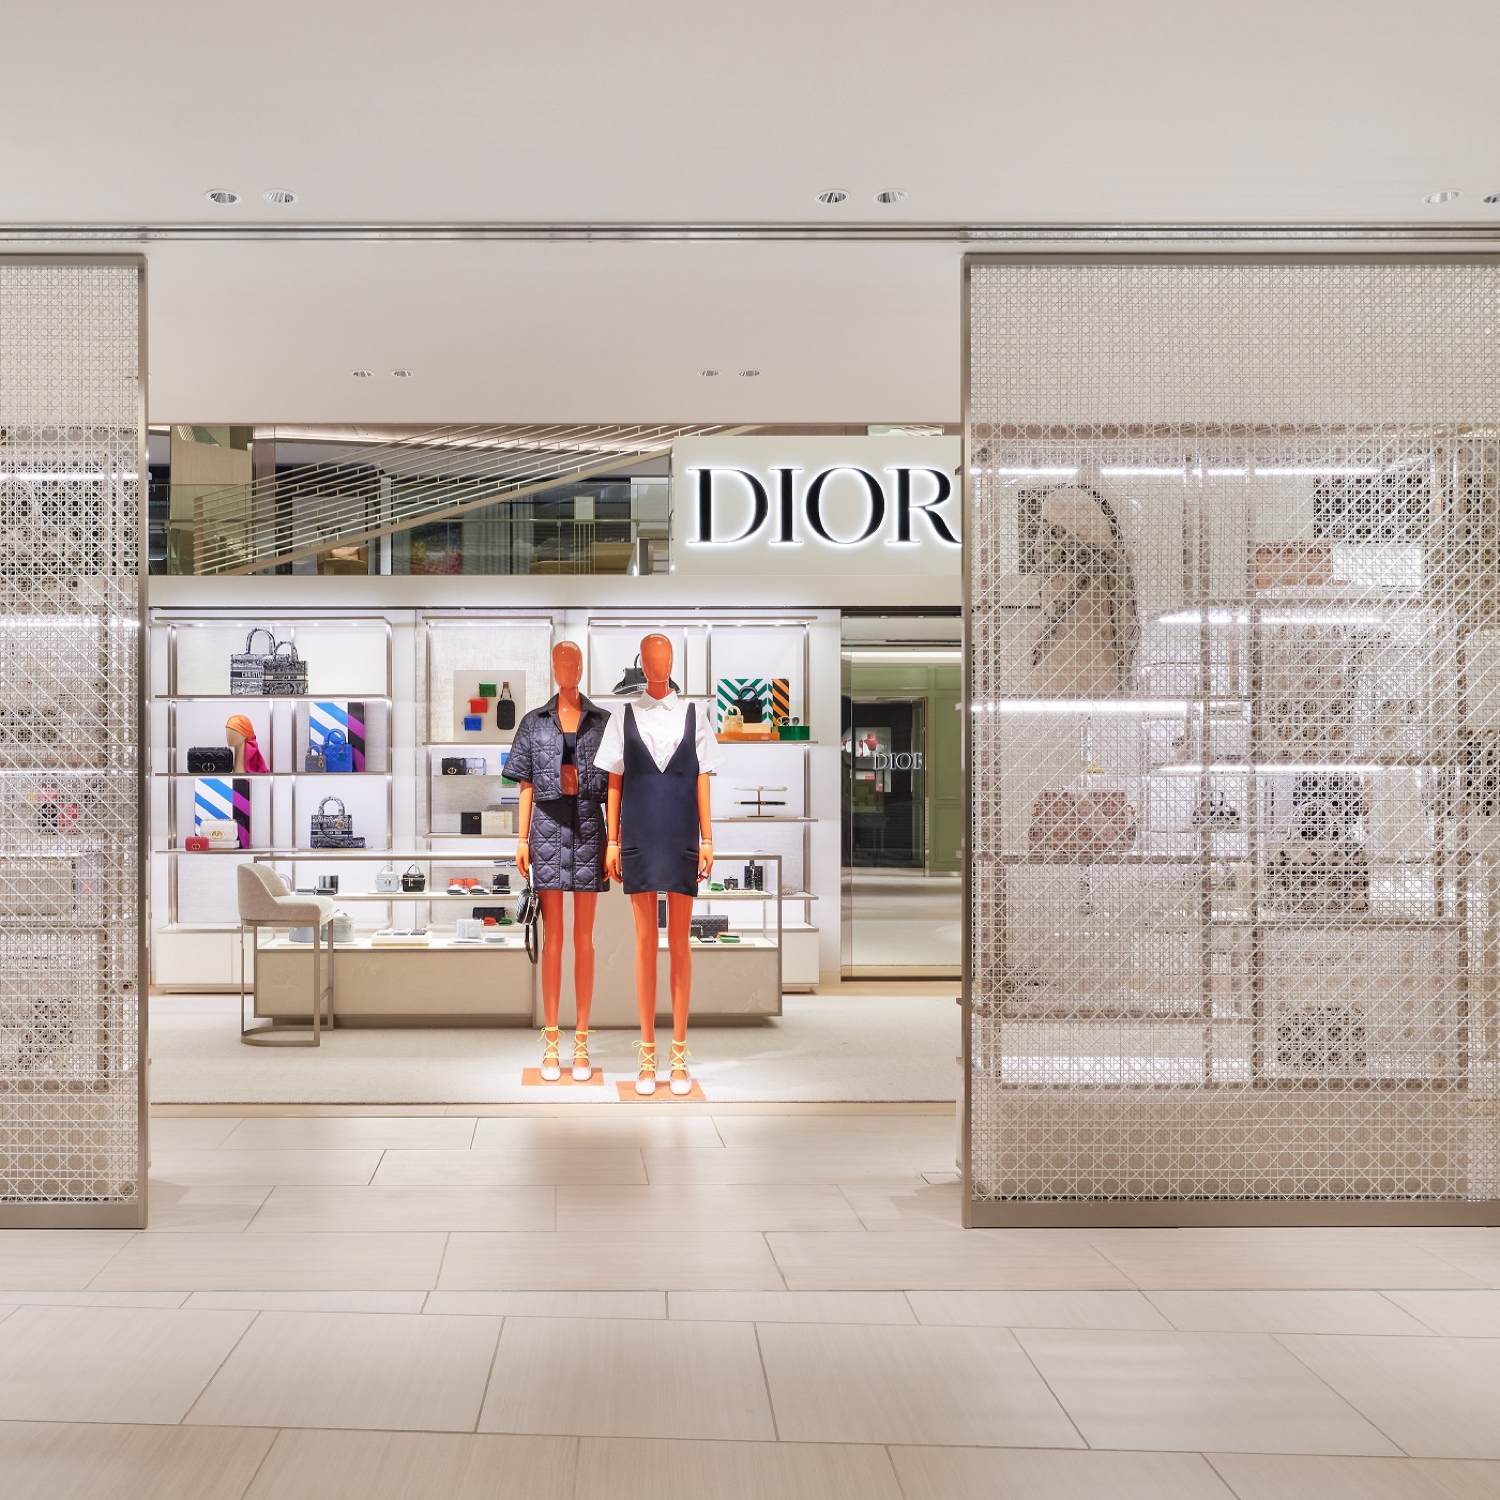 Tokyo: Dior pop-up store